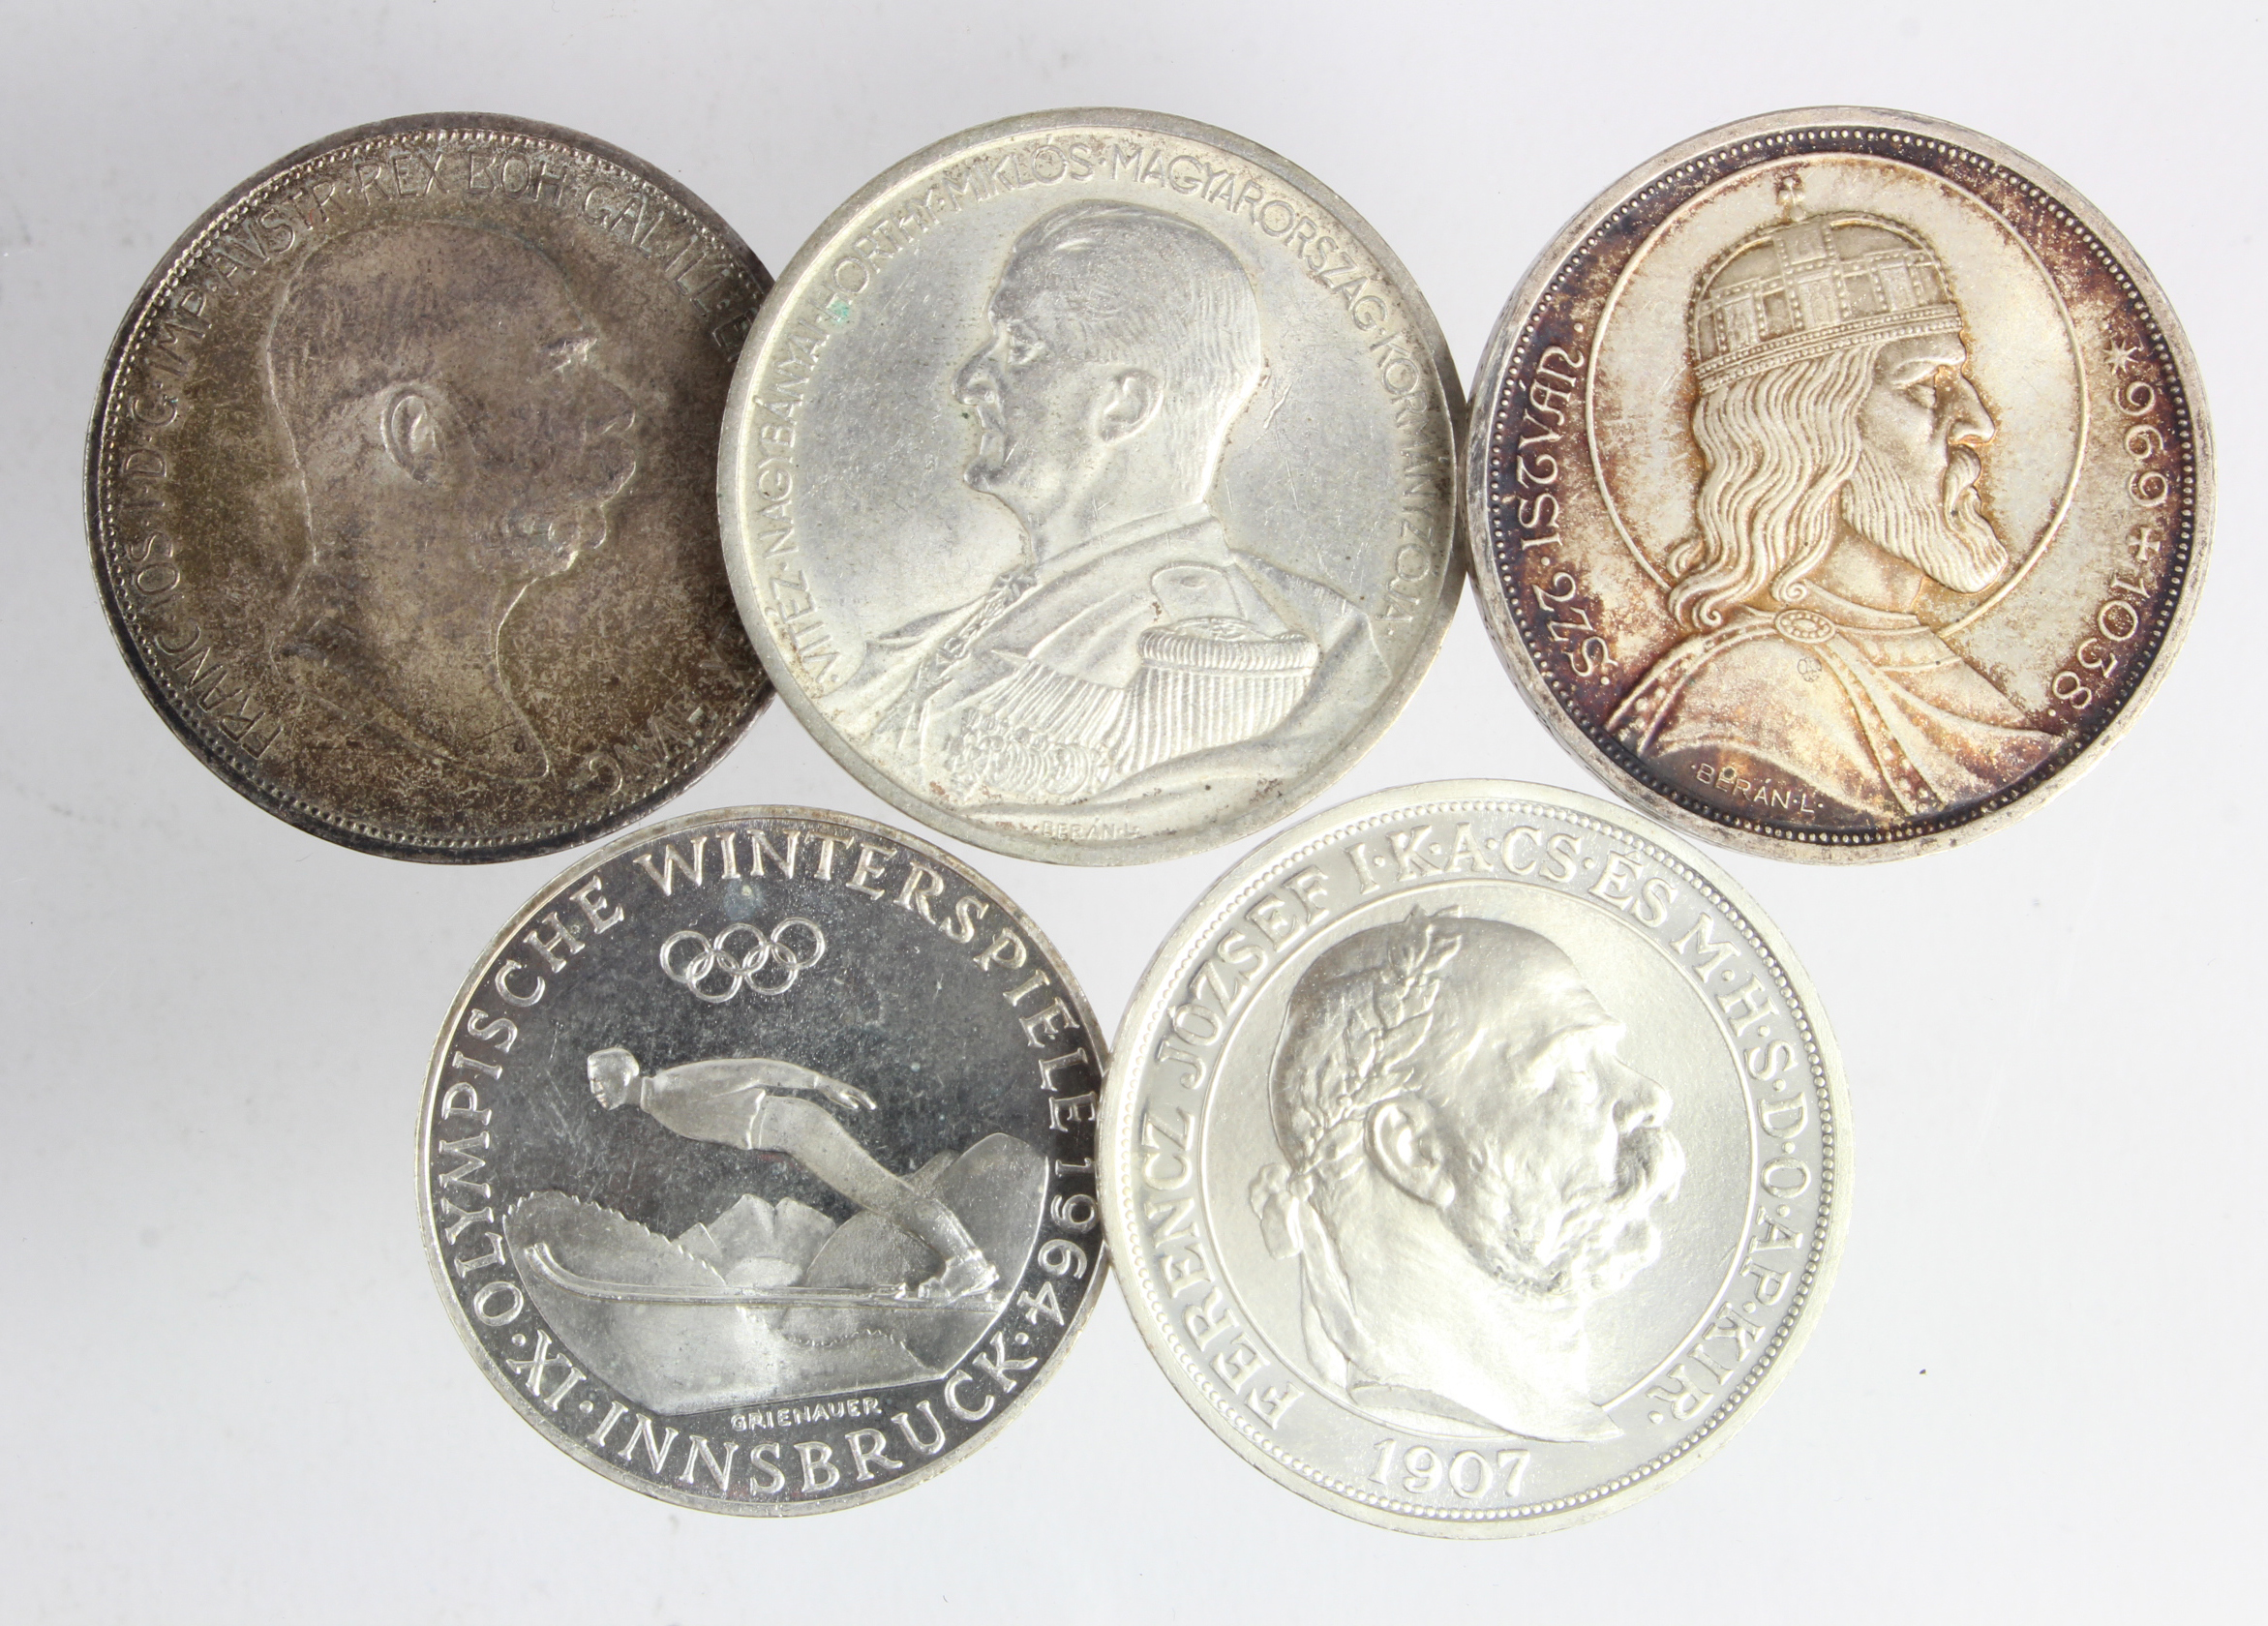 Austria & Hungary (5) crown-size silver coins: Austria Franz Joseph 60th Anniversary of Reign silver